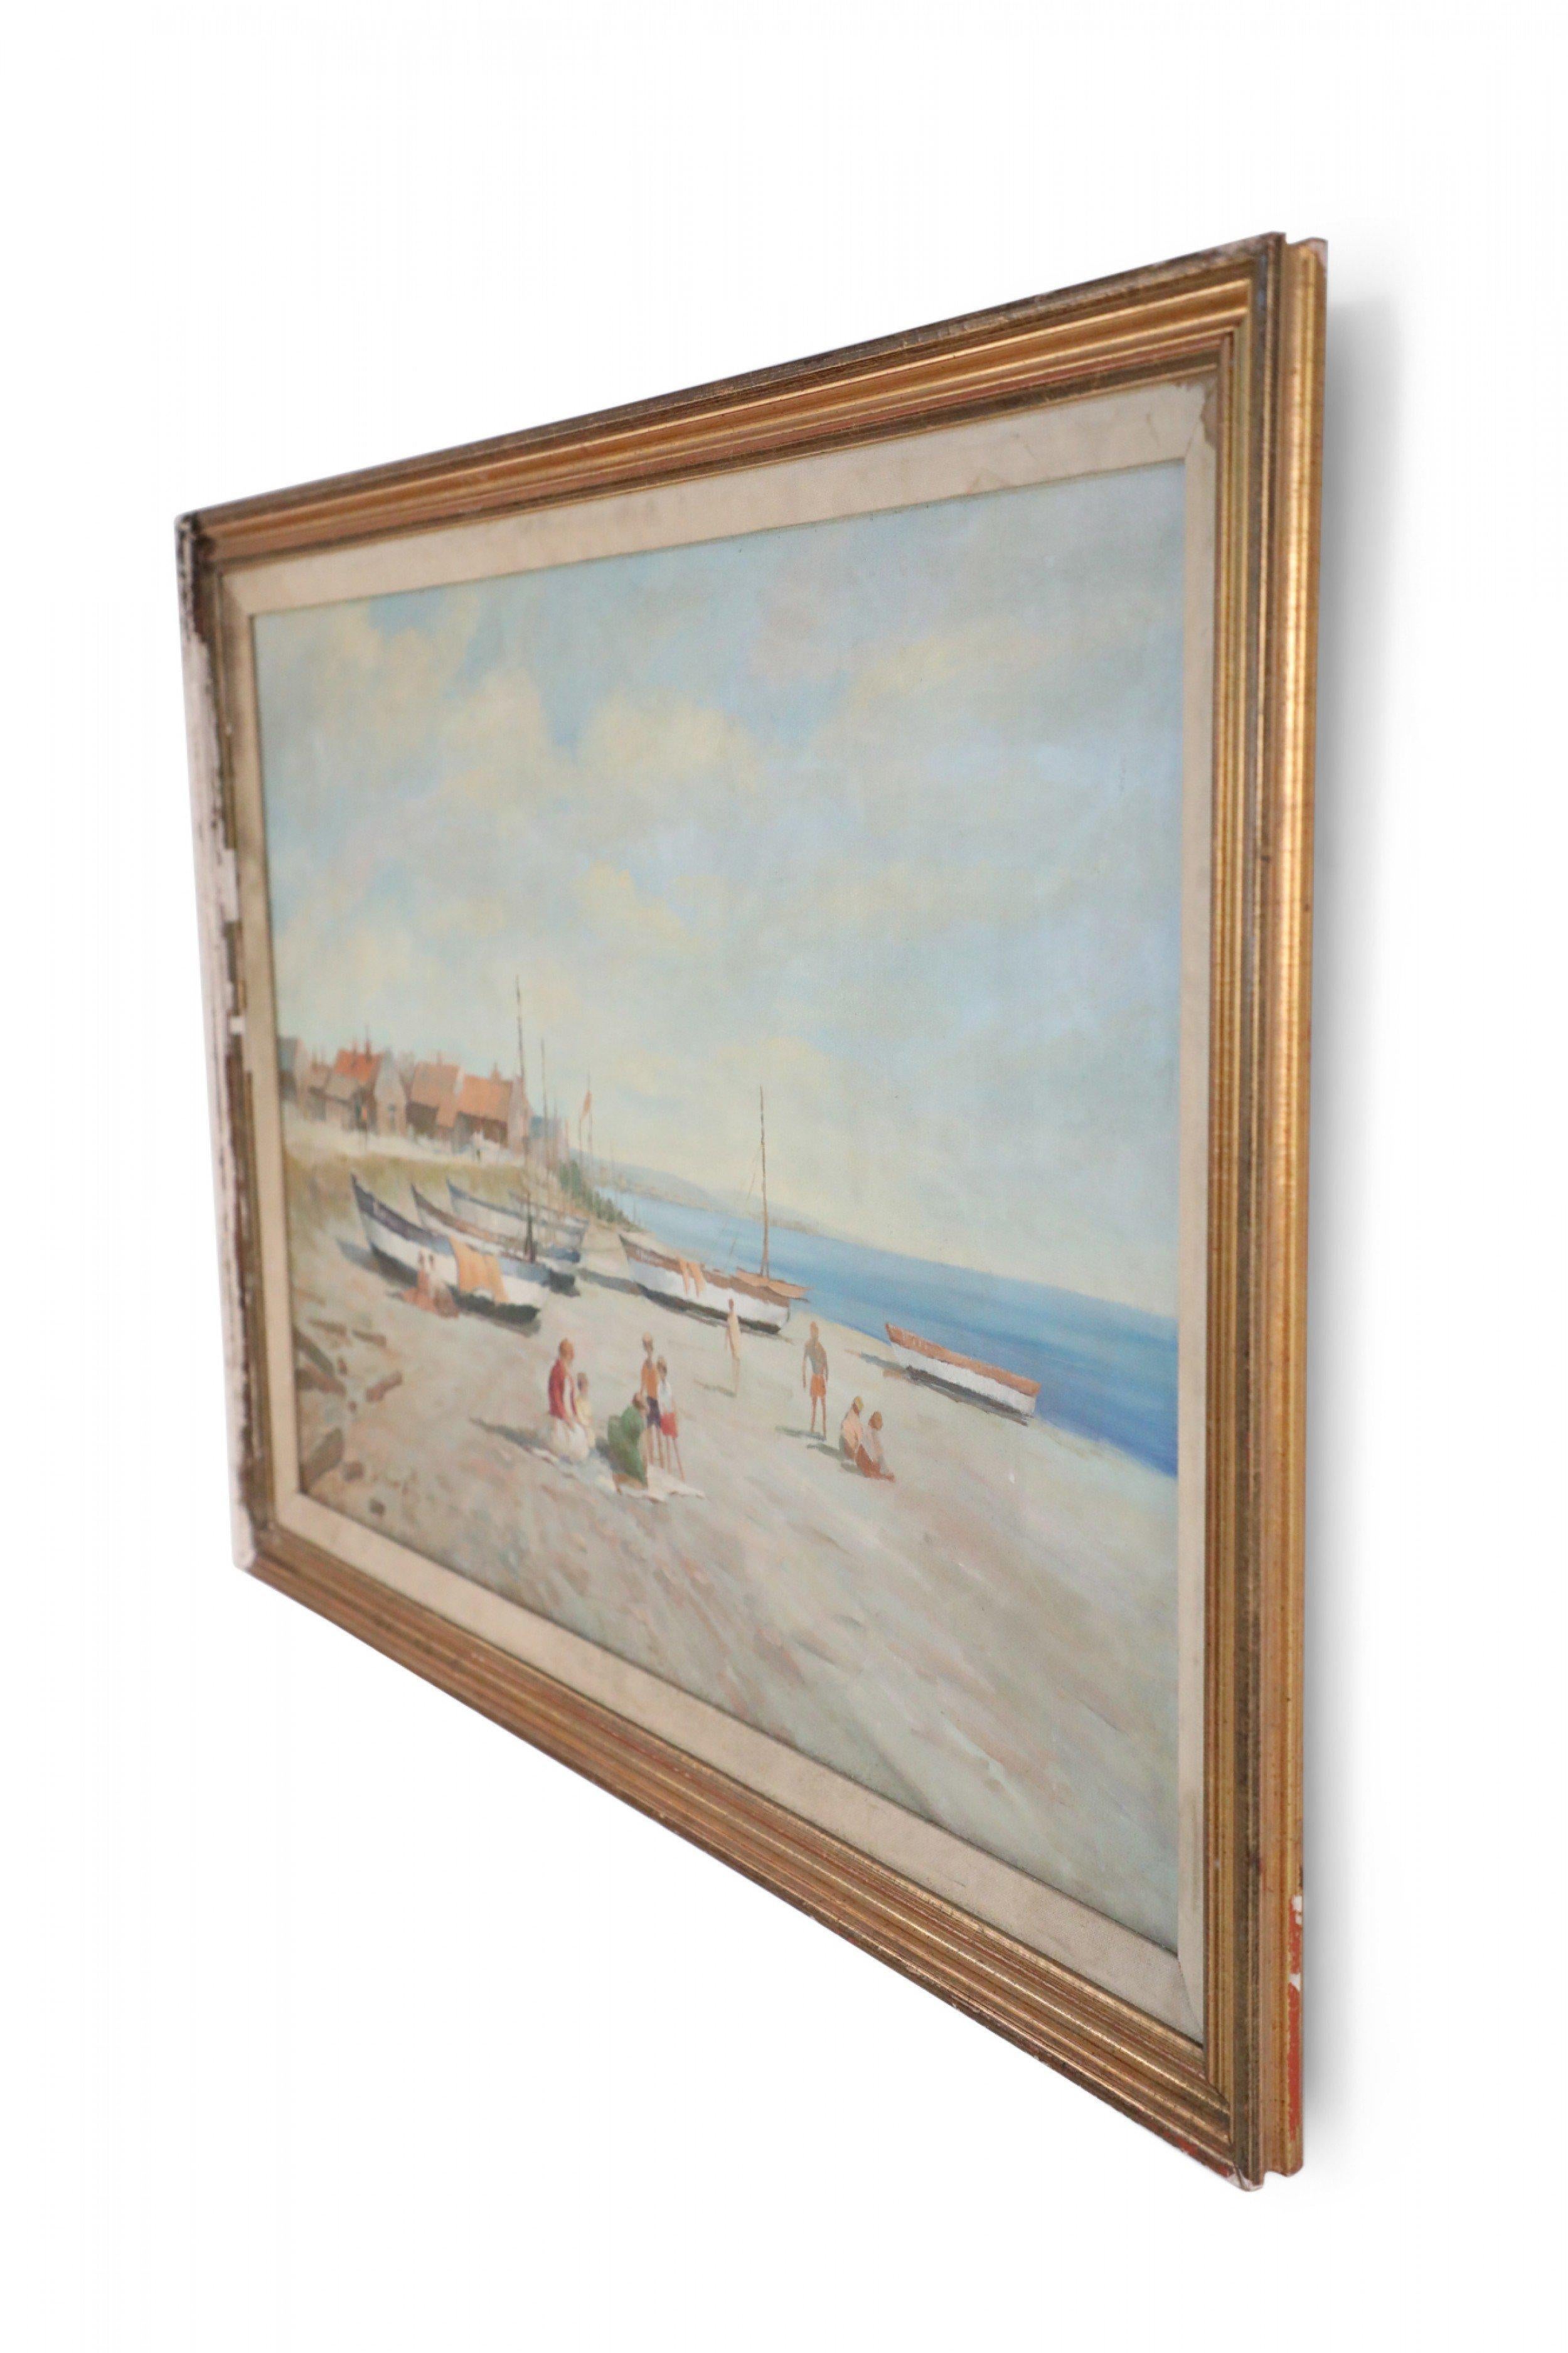 Vintage oil painting framed landscape seascape coastal sea boat coast impressionist sailing boats ocean ship small